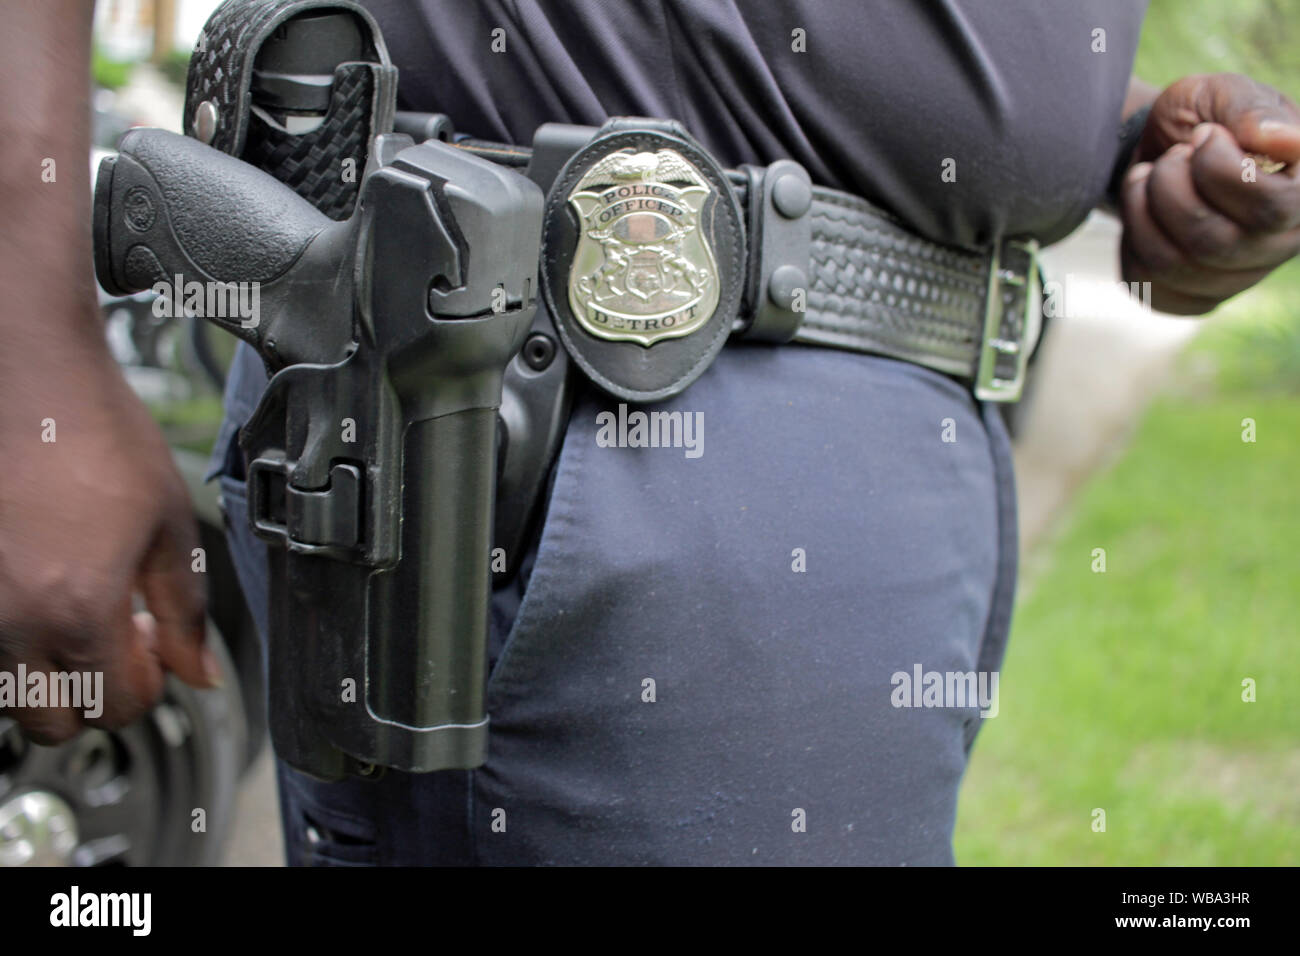 Gun and badge on cop’s belt, Detroit, Michigan, USA Stock Photo